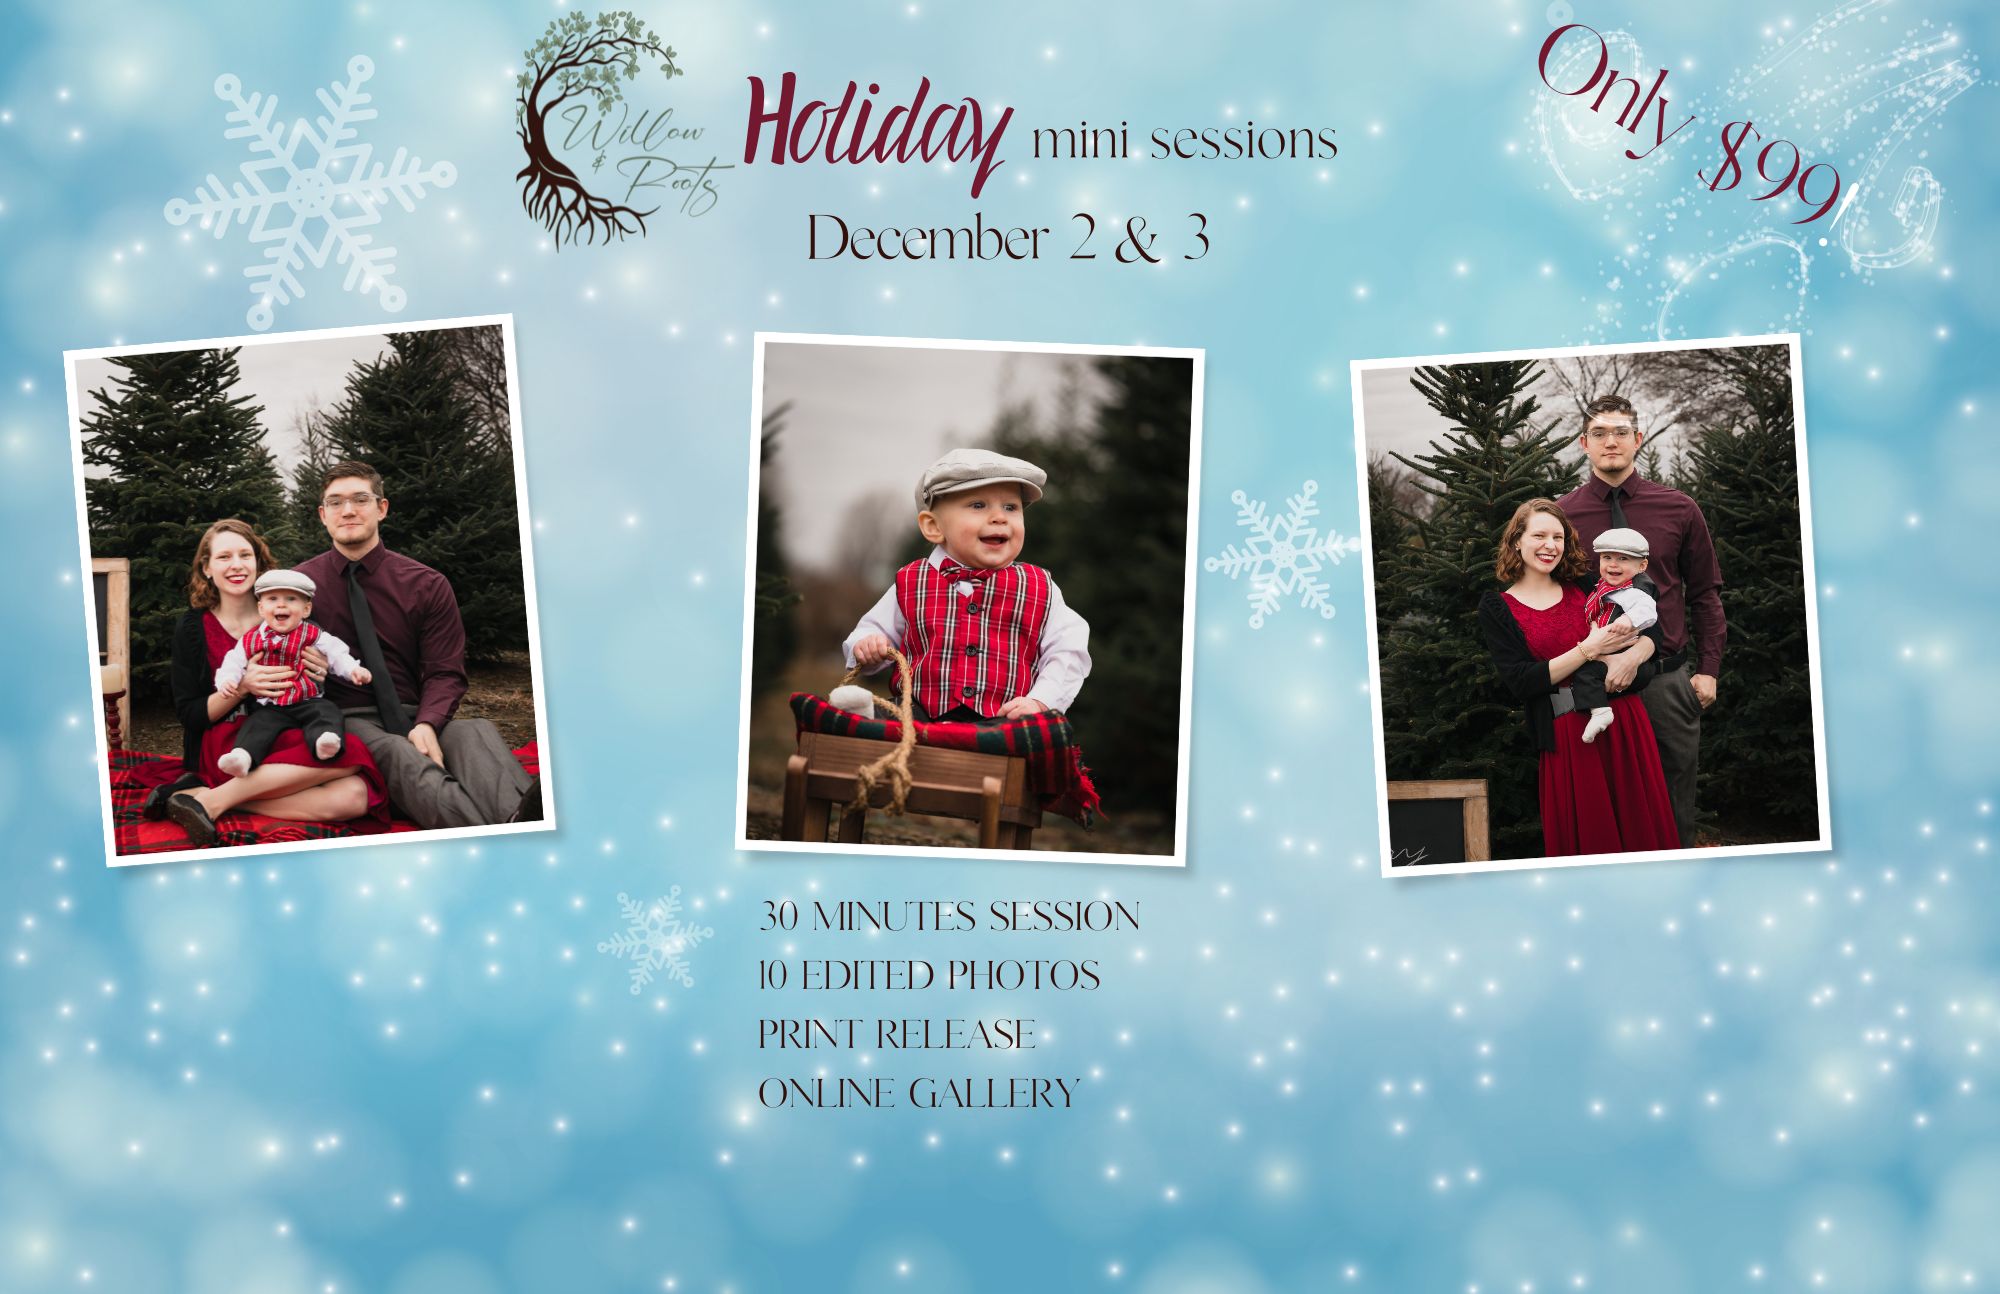 Christmas Photos - Holiday Mini Sessions Erie Pa - Family Christmas Photos